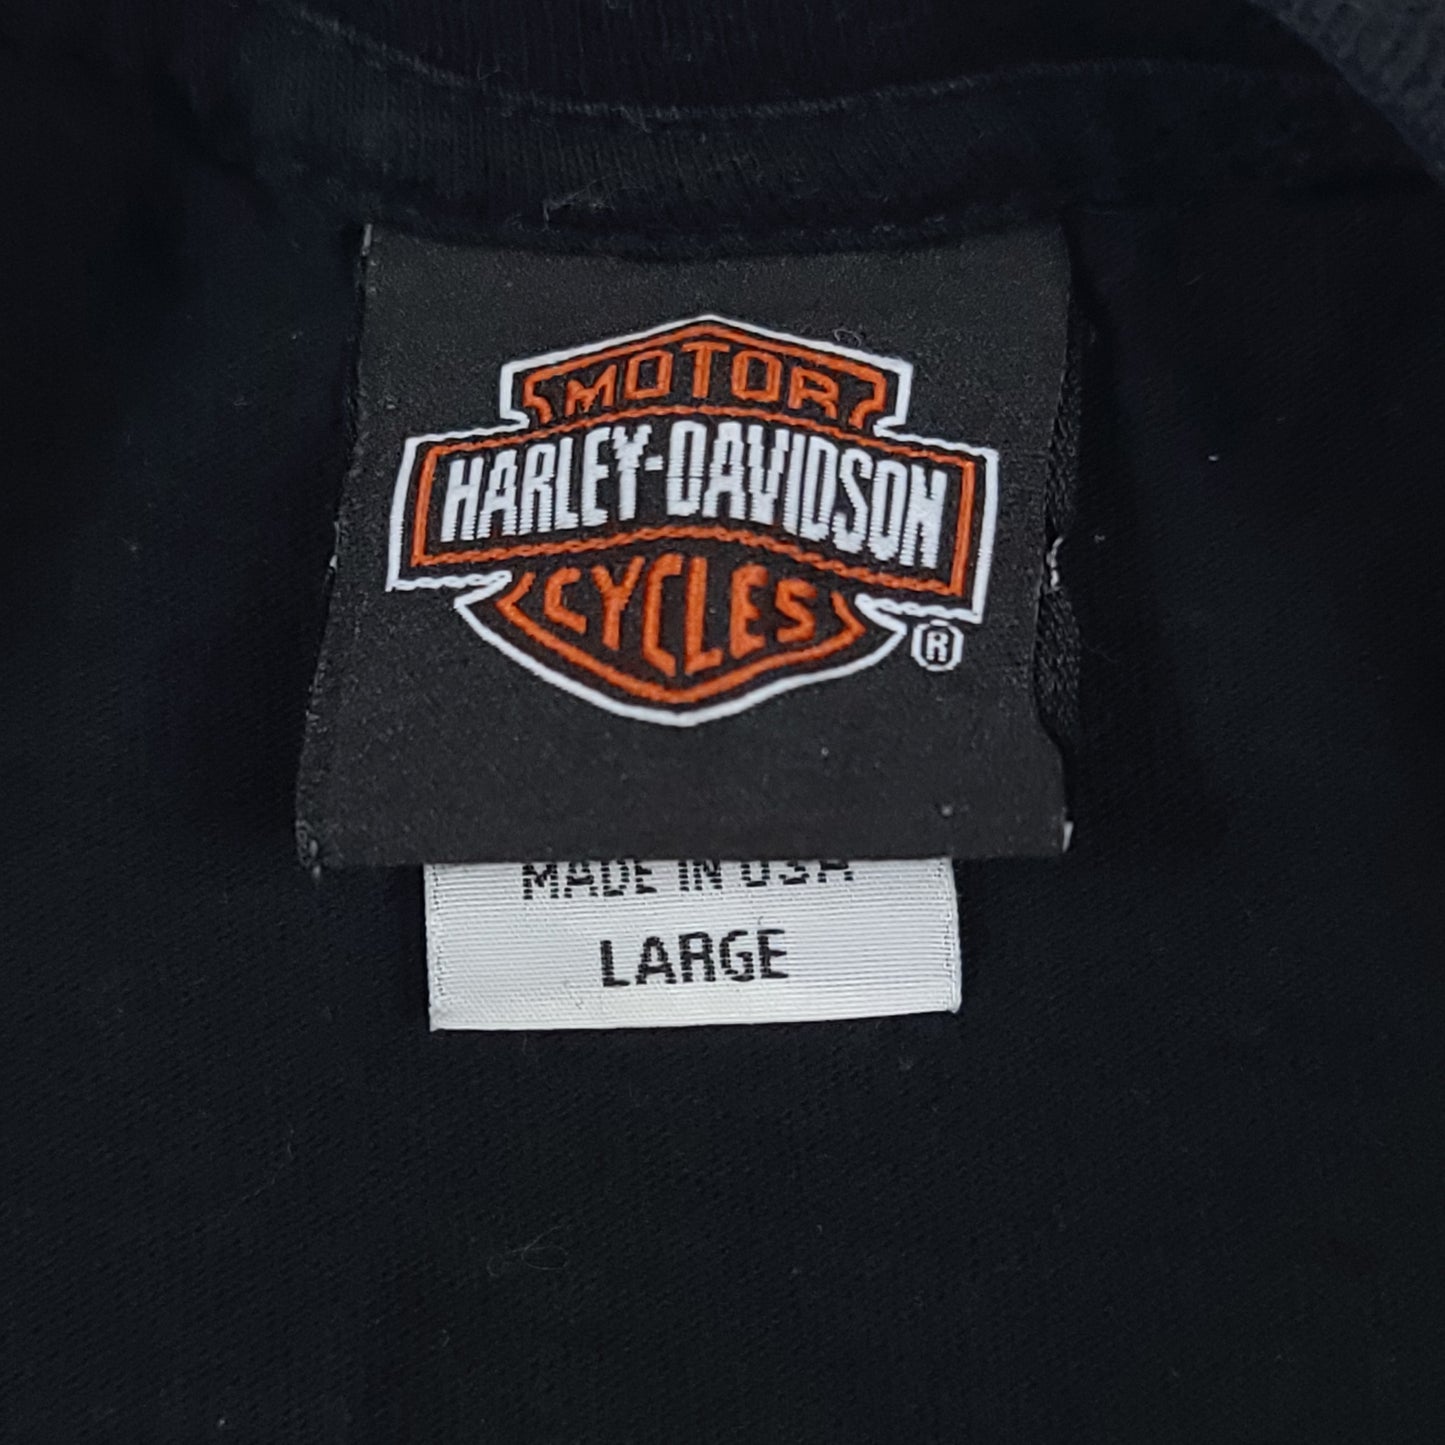 Harley Davidson Motorcycles Cleveland Ohio Tee